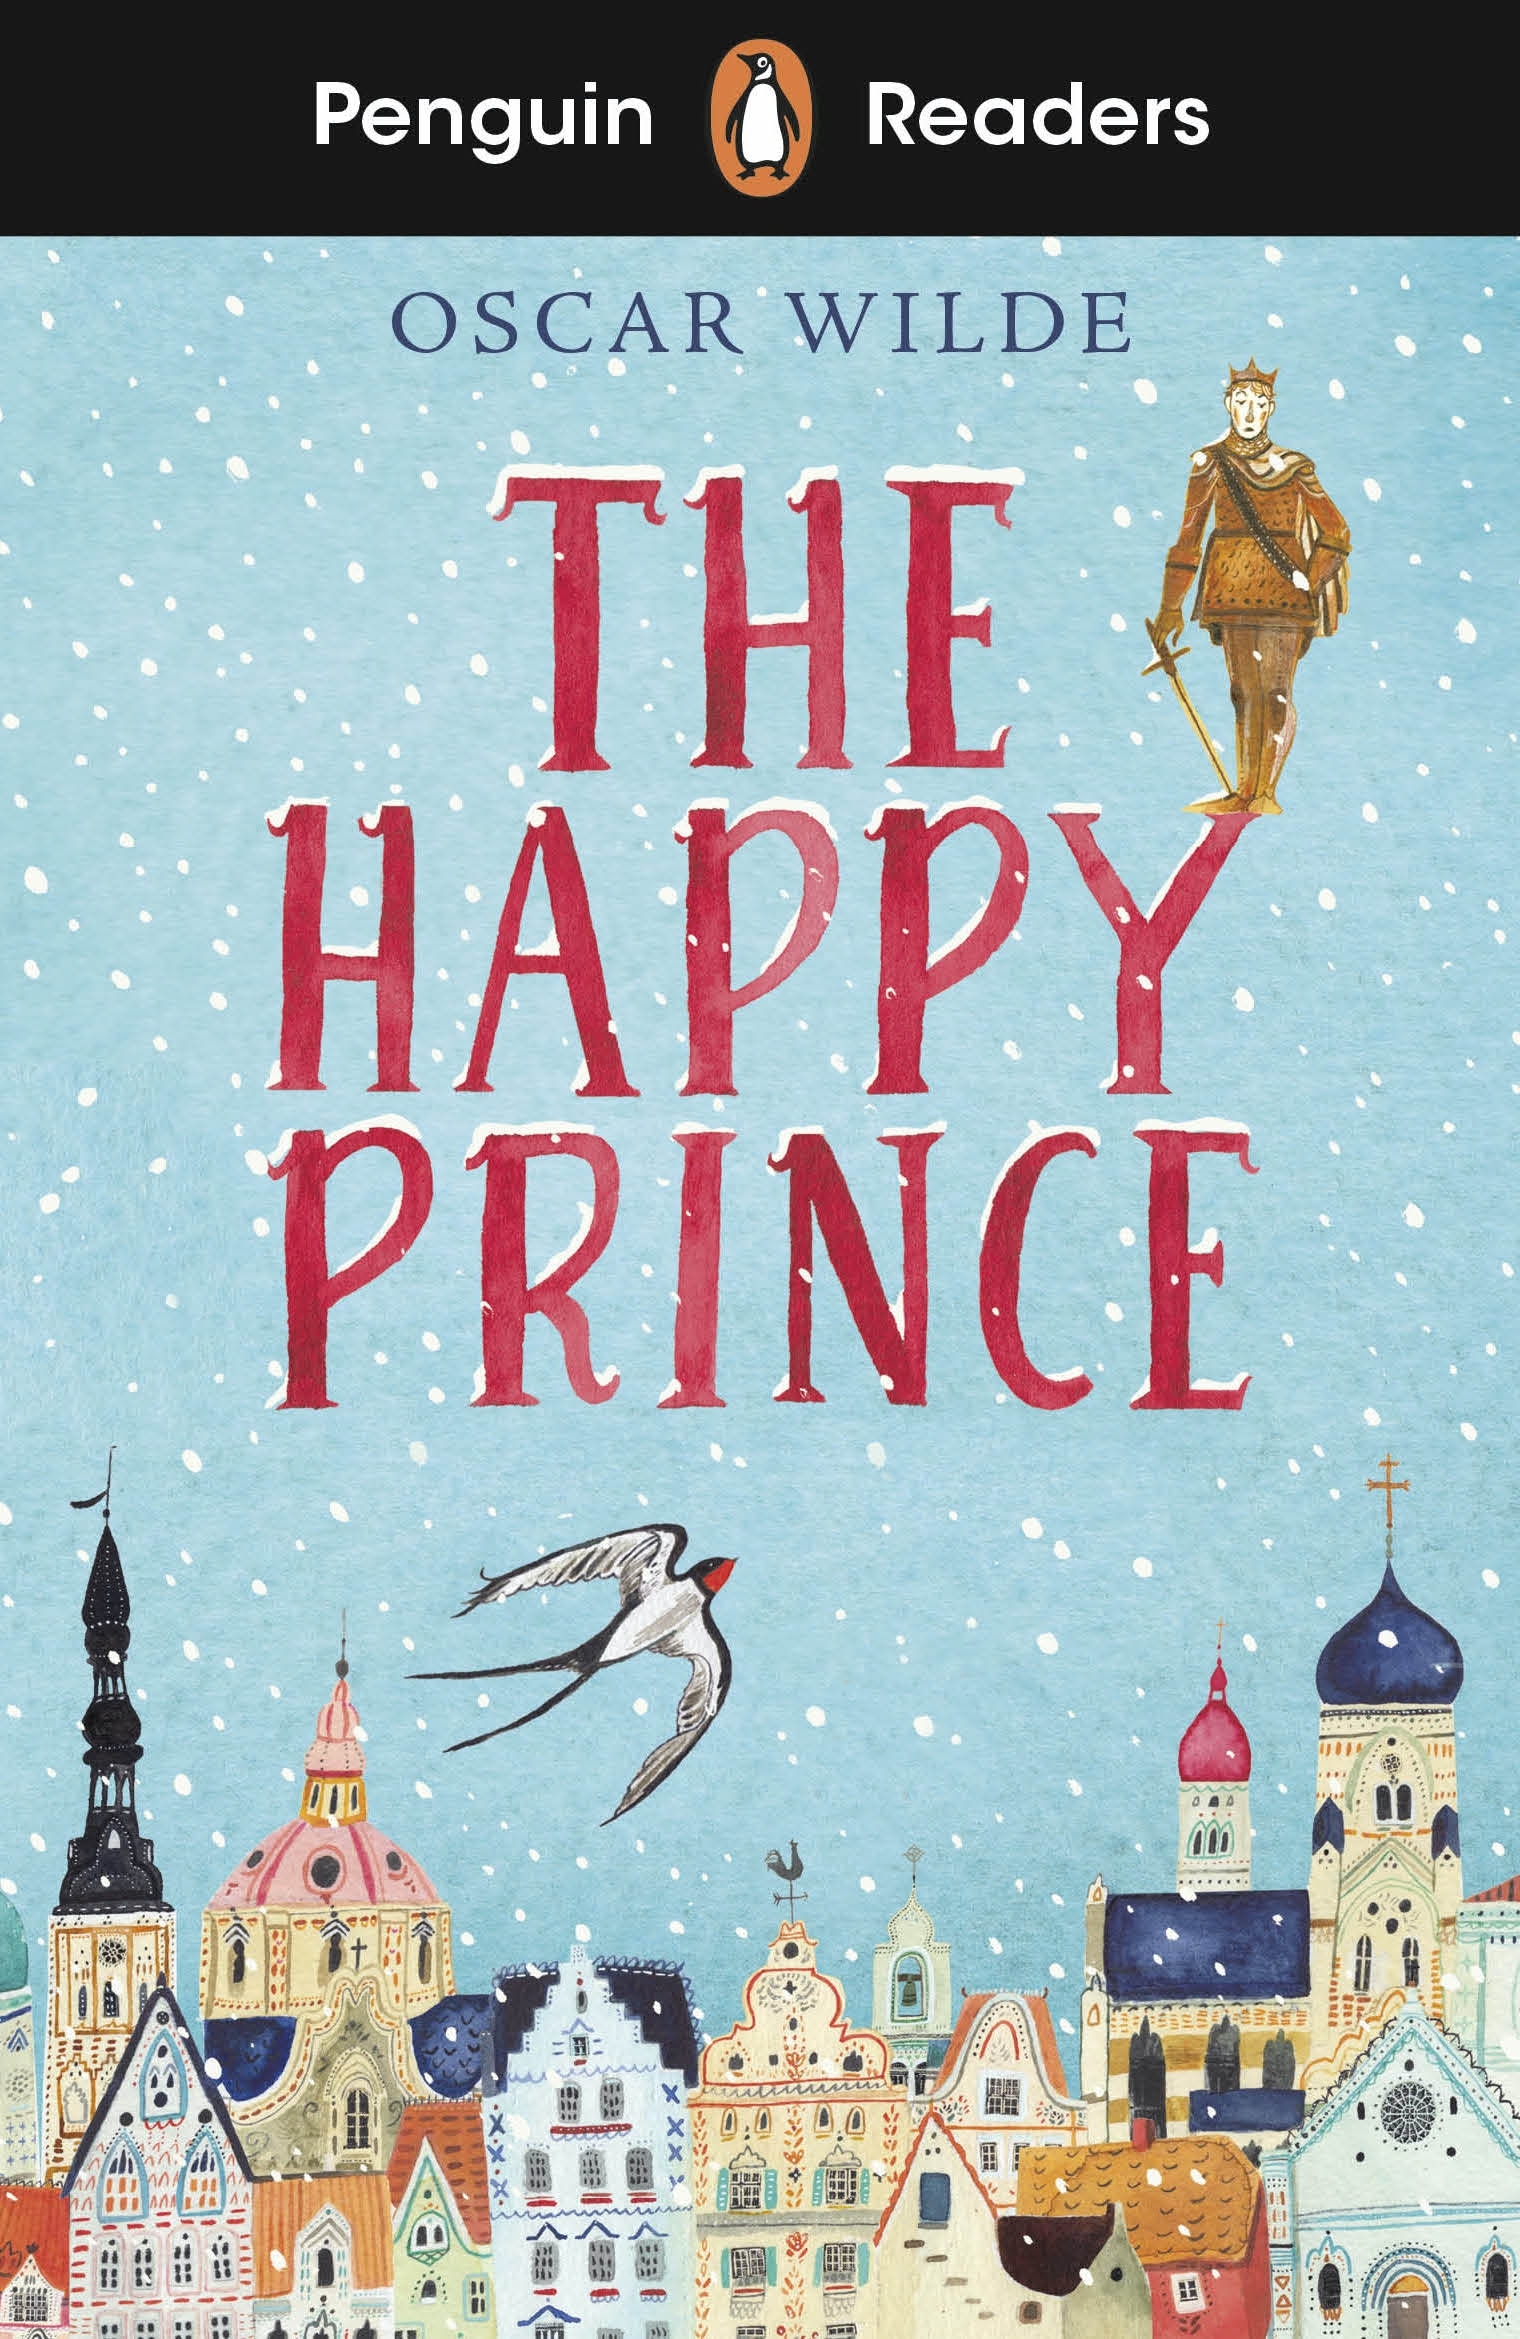 Book “Penguin Readers Starter Level: The Happy Prince (ELT Graded Reader)” by Oscar Wilde — February 2, 2023